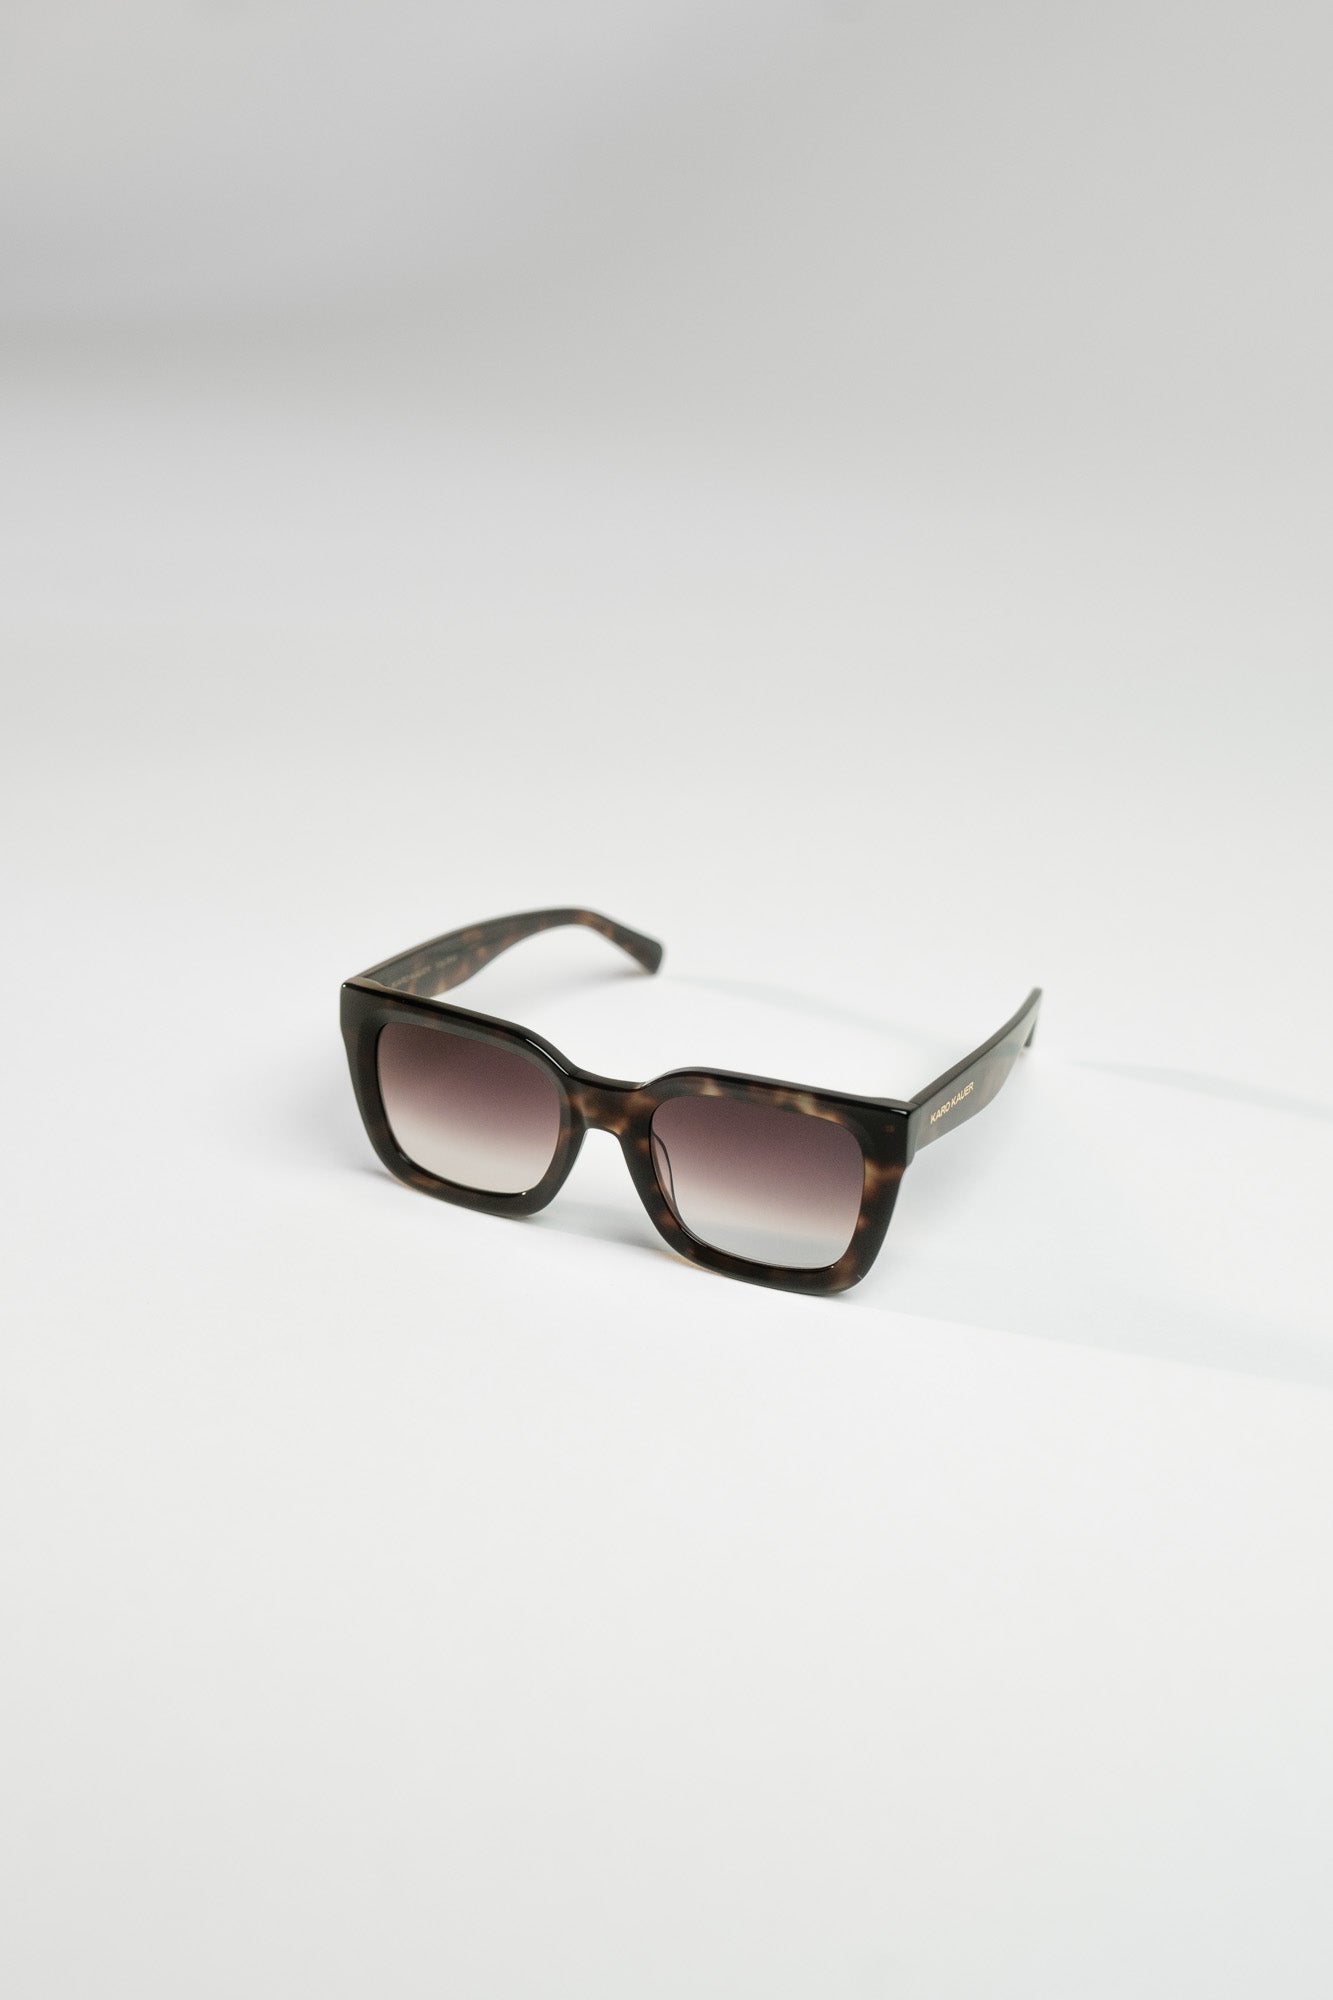 Sunglasses Edgy Black